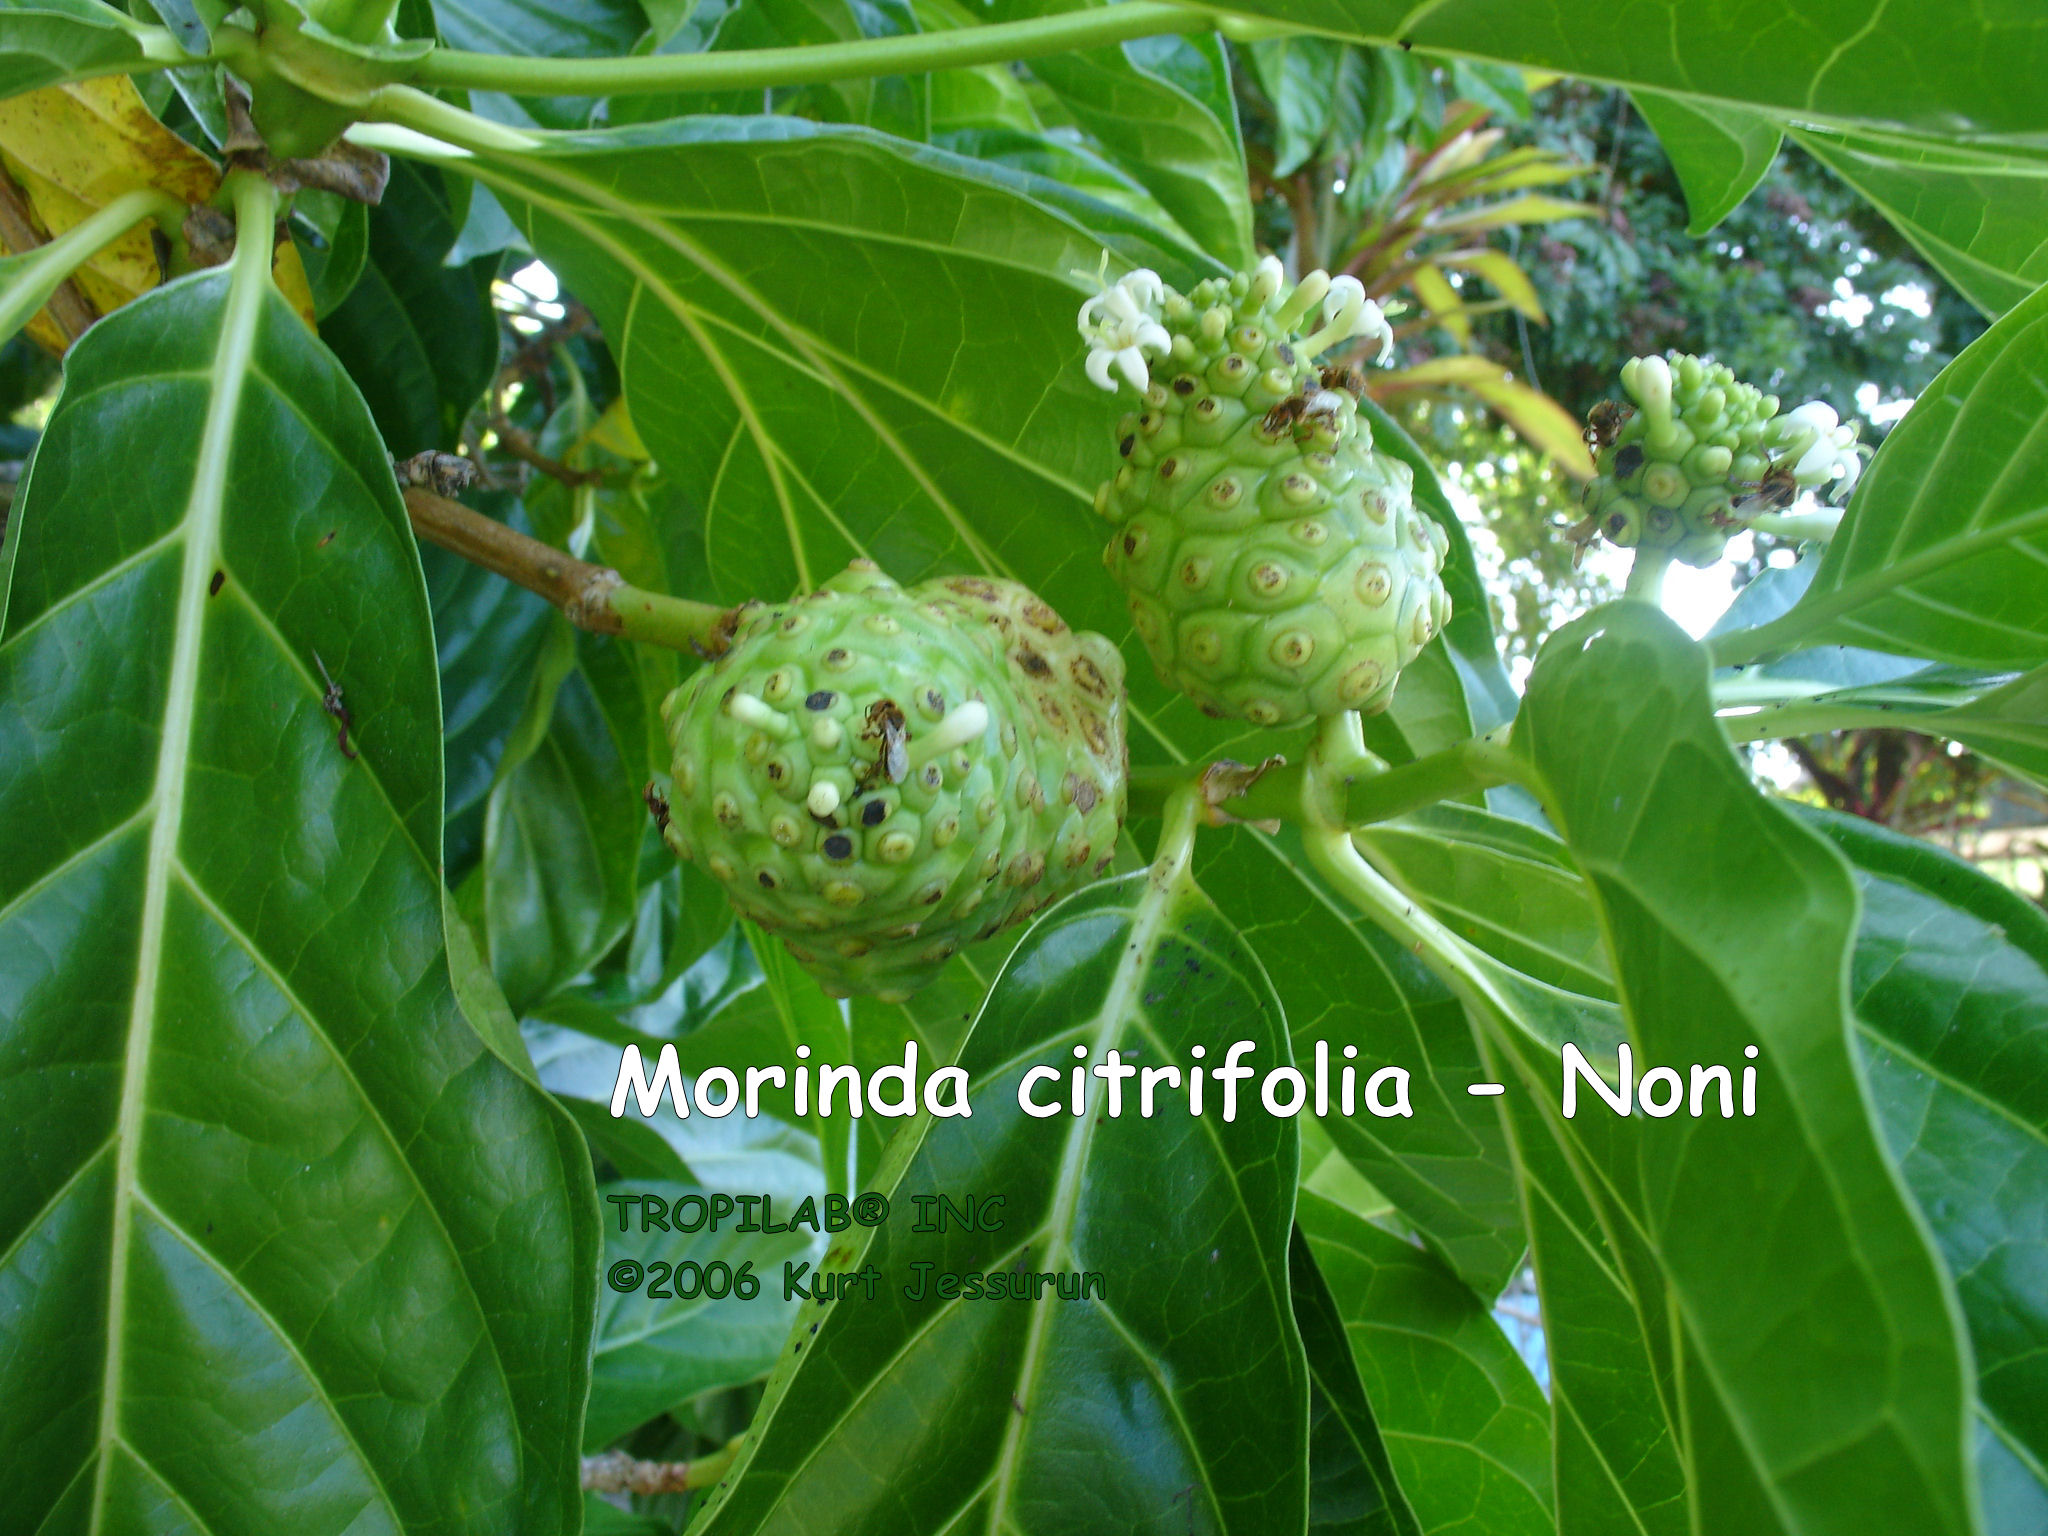 Morinda citrifolia - Noni young fruits